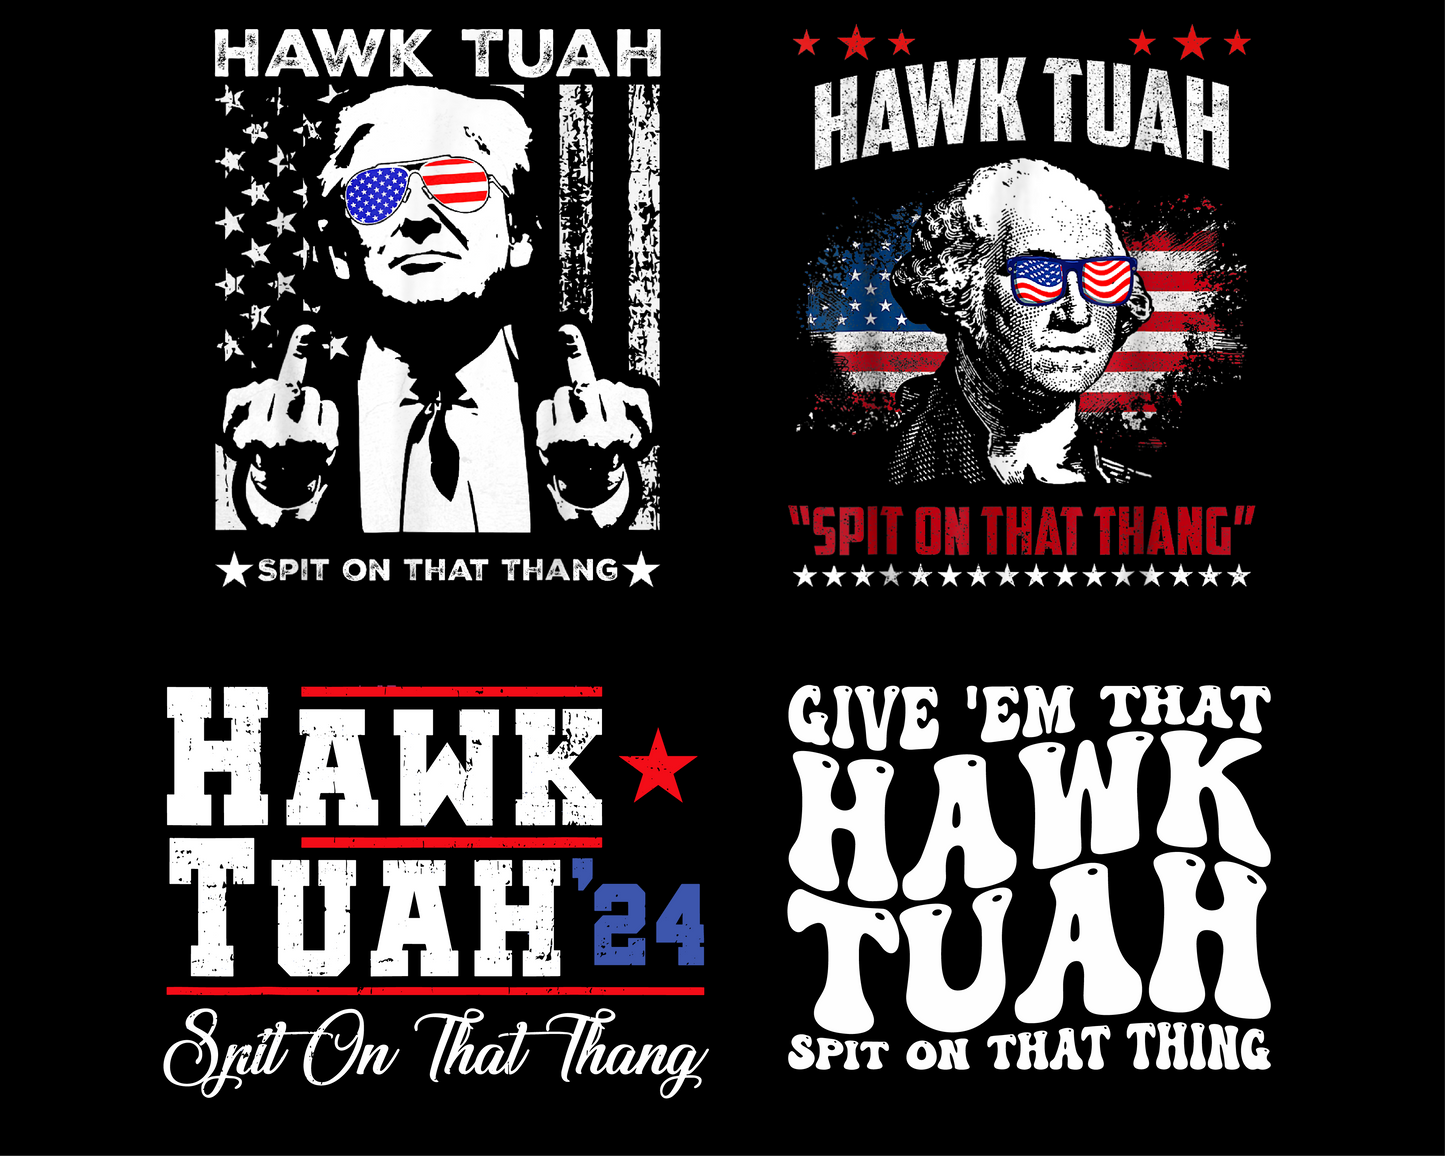 Hawk Tuah '24 Png